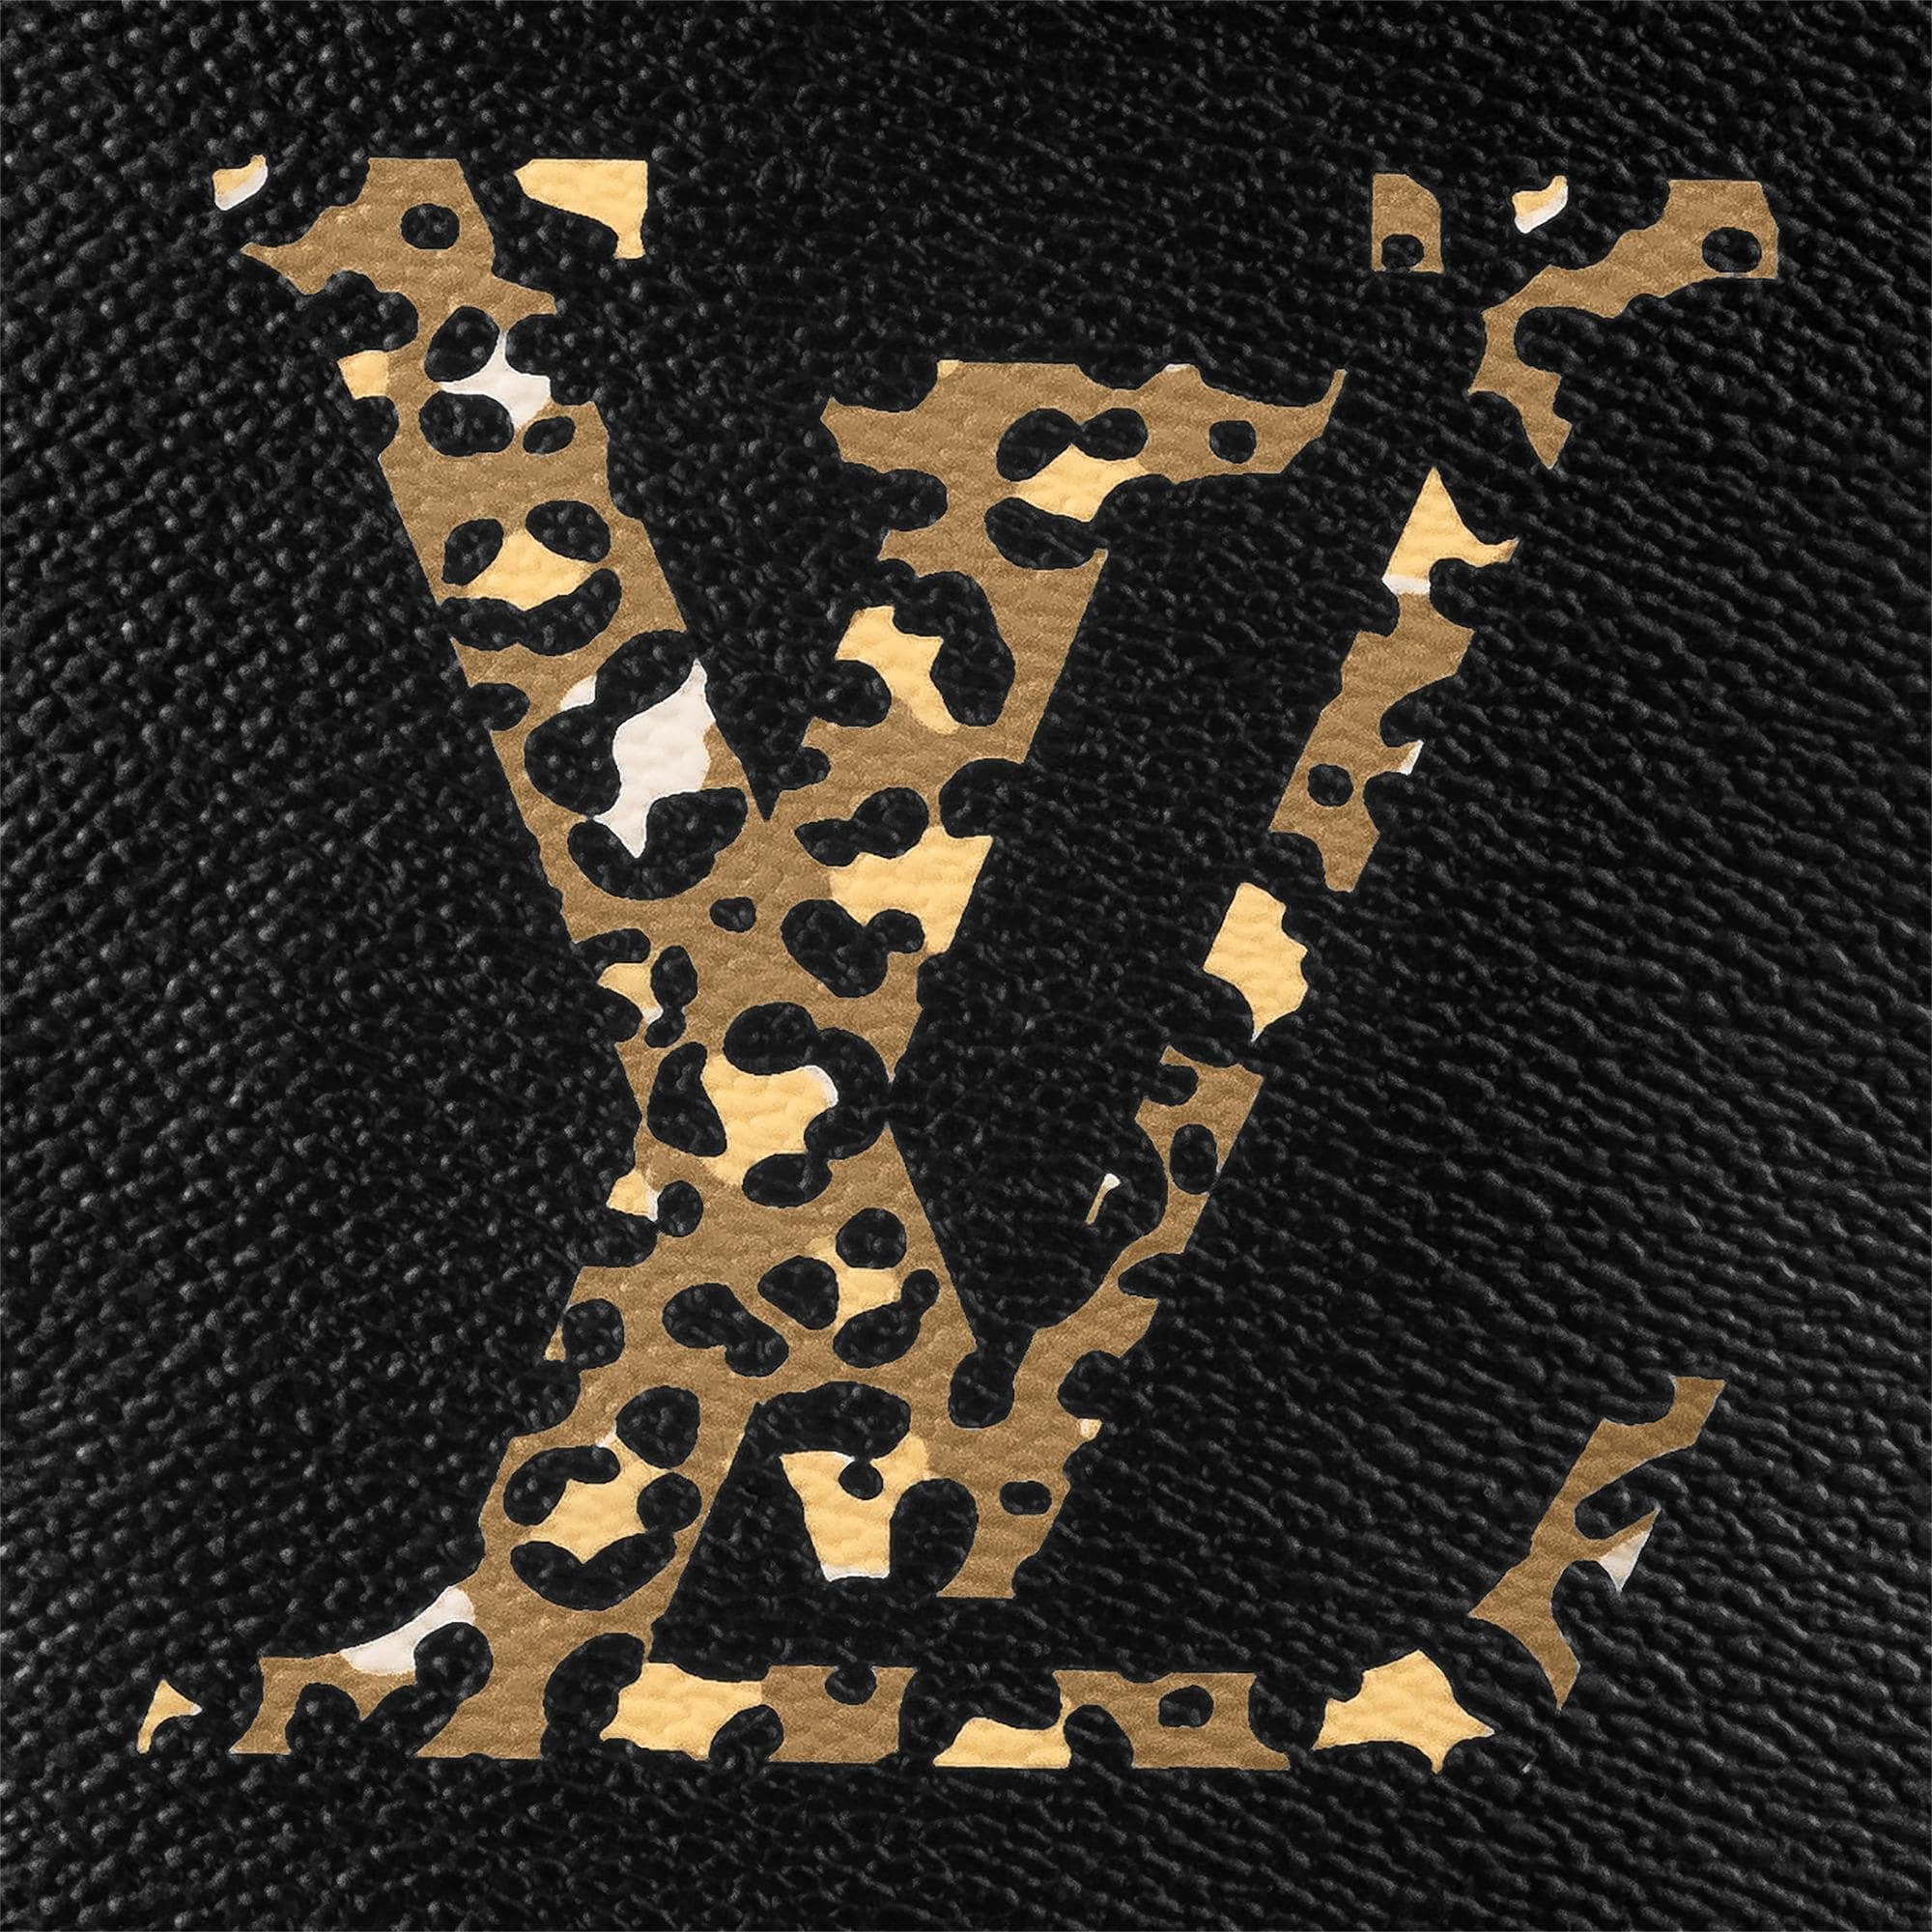 MANIFESTO - YOUR CONCRETE JUNGLE FIX: Louis Vuitton's Monogram